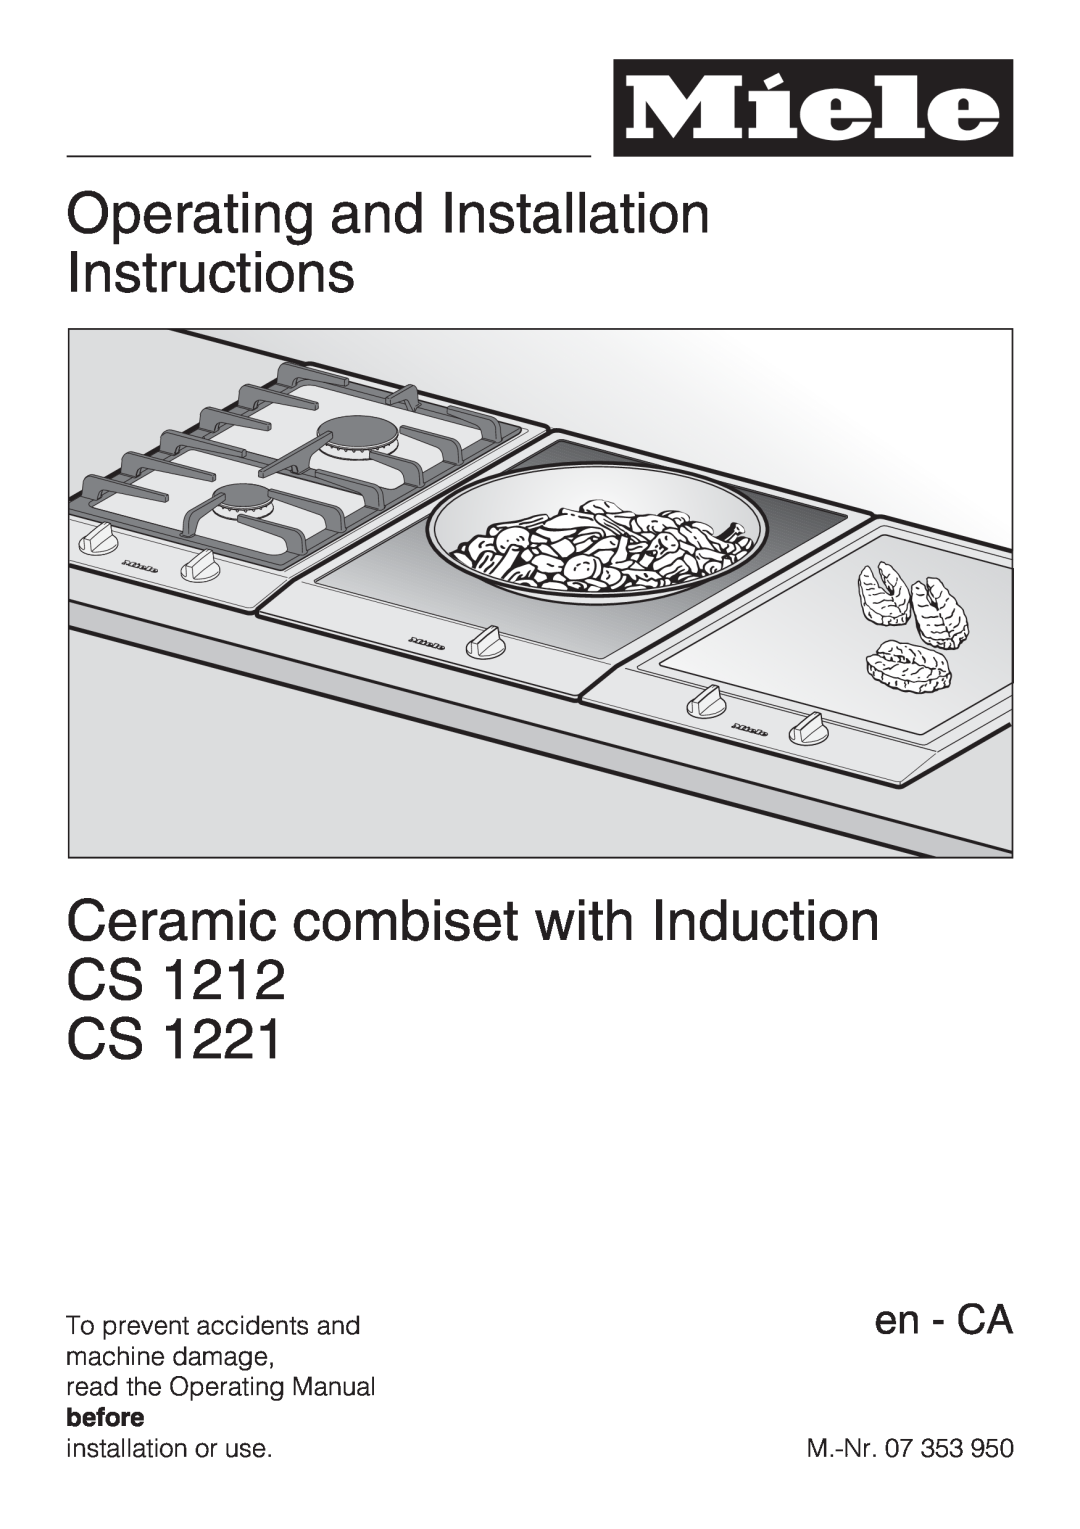 Miele CS1212 installation instructions Operating and Installation Instructions, Ceramic combiset with Induction CS CS 